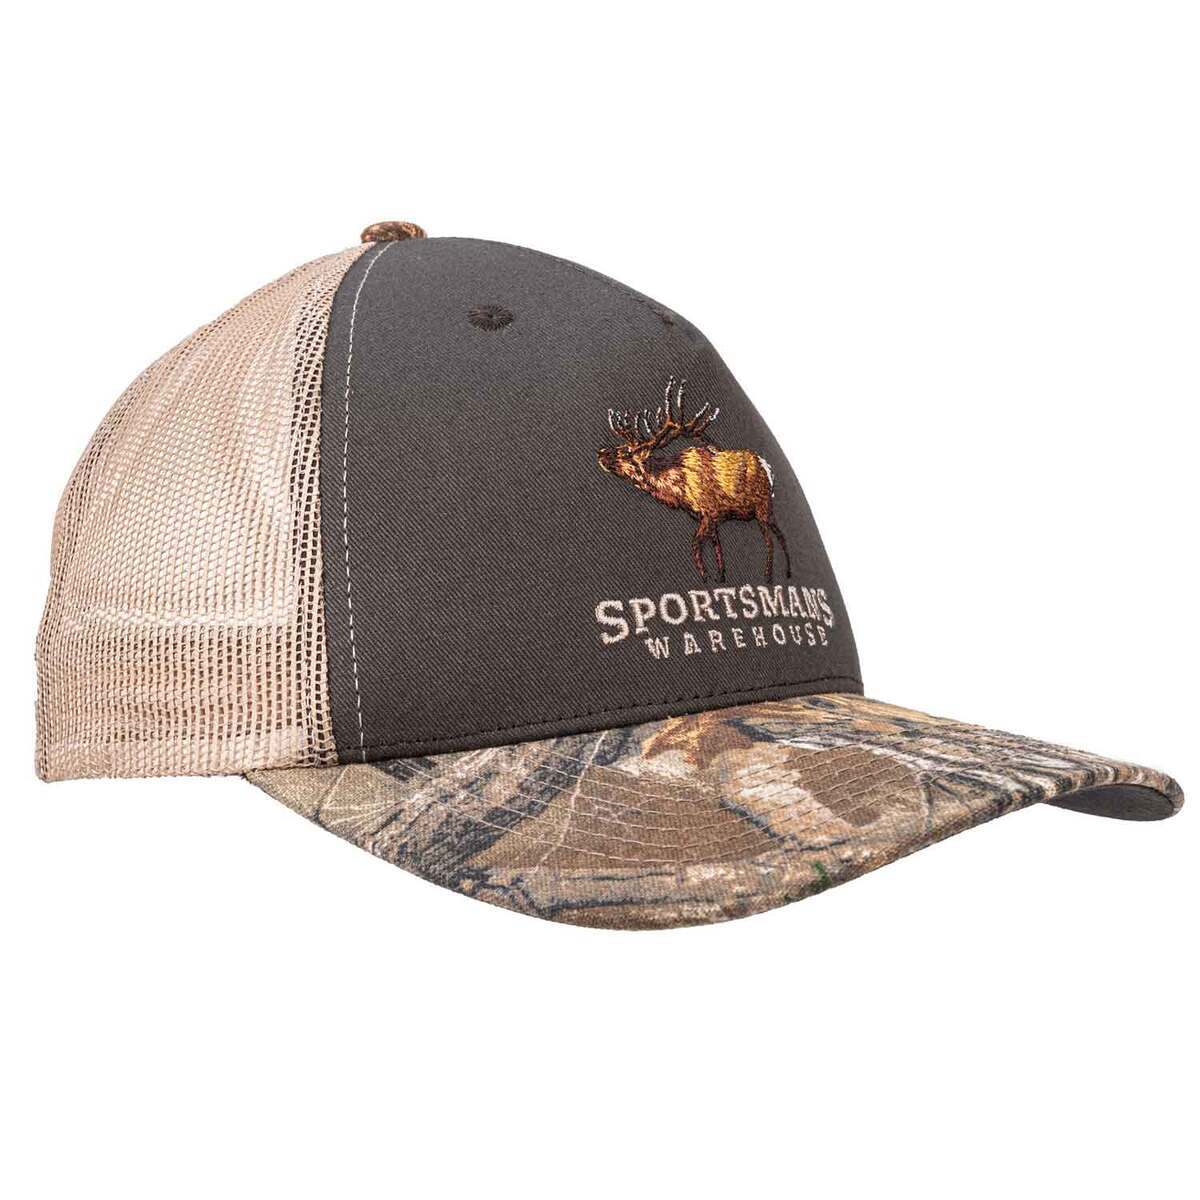 Sportsman's Warehouse Elk Camo Mesh Adjustable Hat - Loden/Tan One Size Fits Most